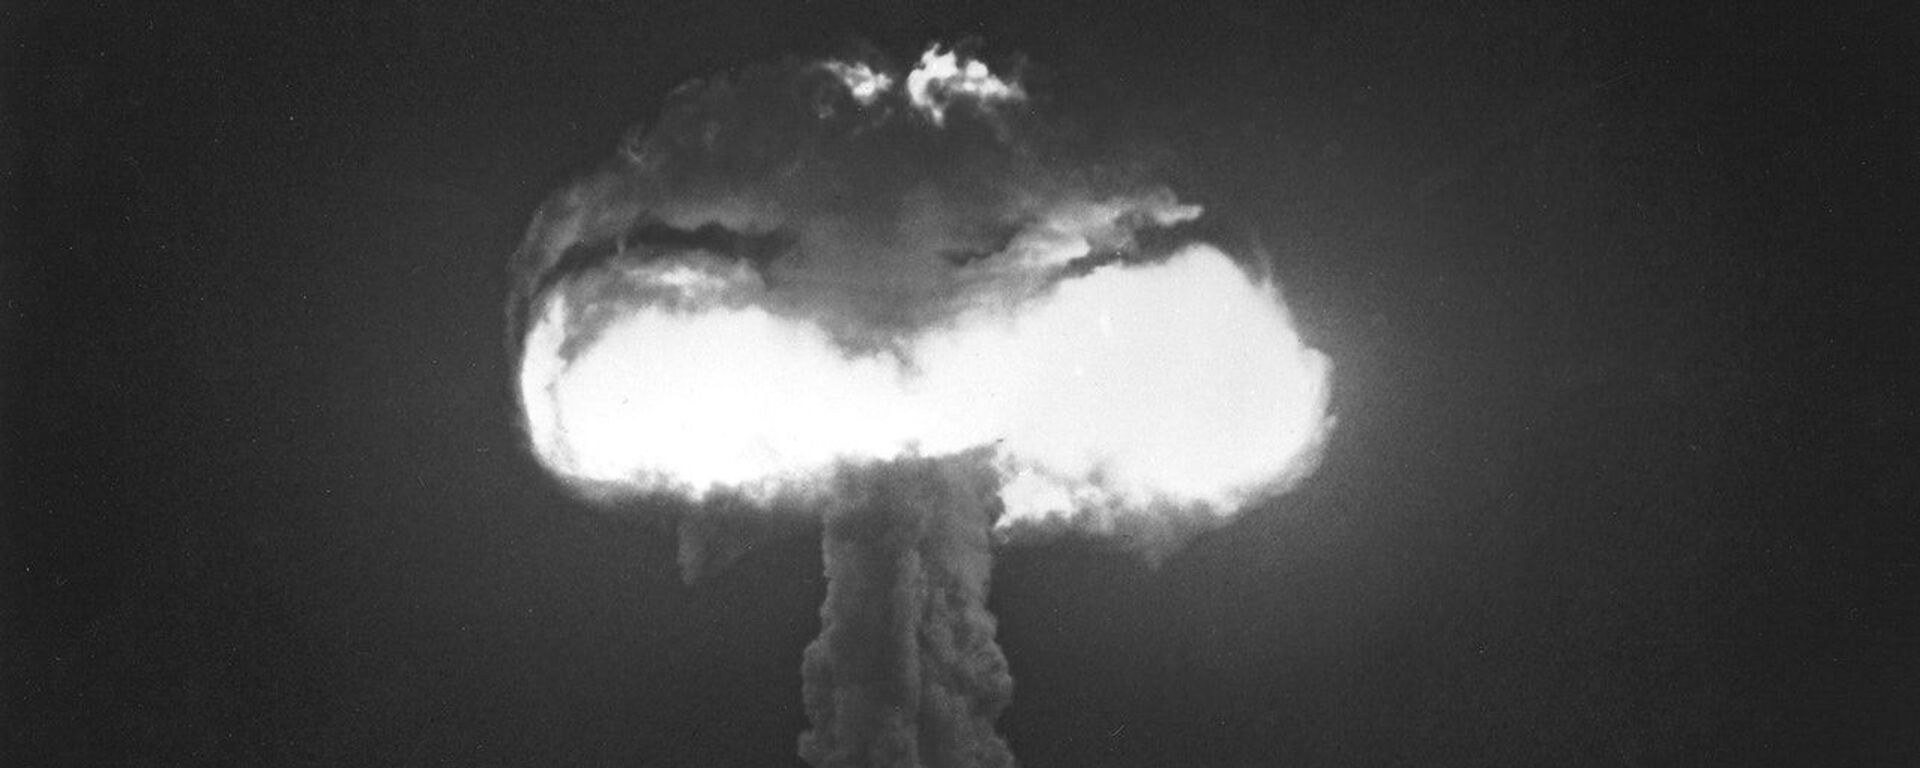 Plumbbob Hood atomic bomb test at Nevada nuclear test site, on July 5, 1957 - Sputnik International, 1920, 10.12.2022